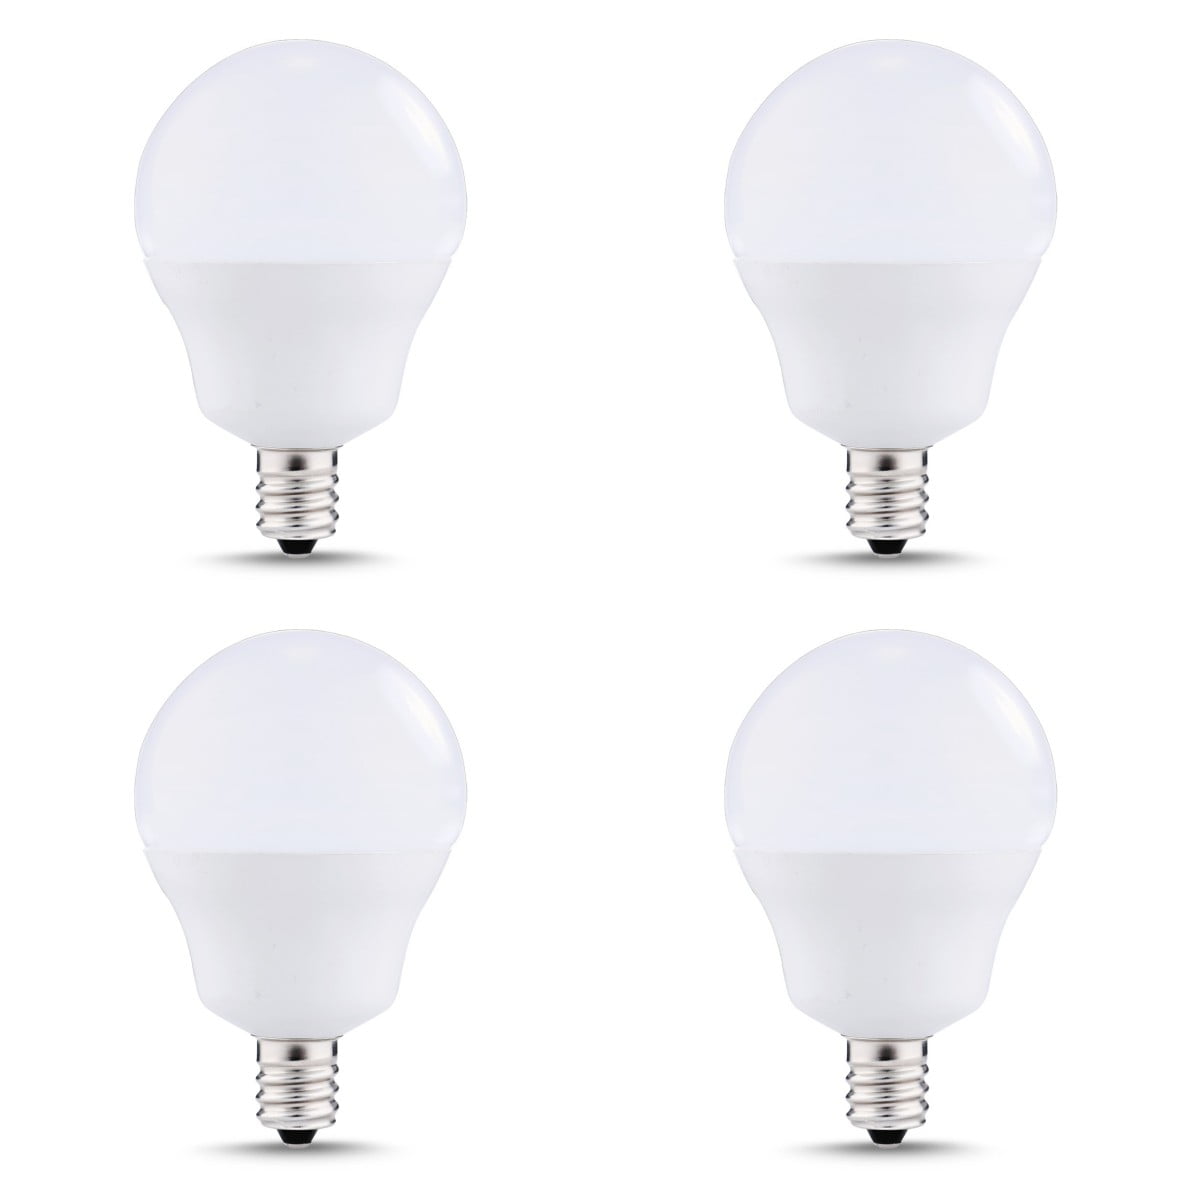 verzoek Bijdrager optie G14 LED Light Bulbs, 6W =40W, Candelabra Bulb, 450 LM, 5000K Naturel White,  Small Edison Screw Base E12, 4 Pack - Walmart.com